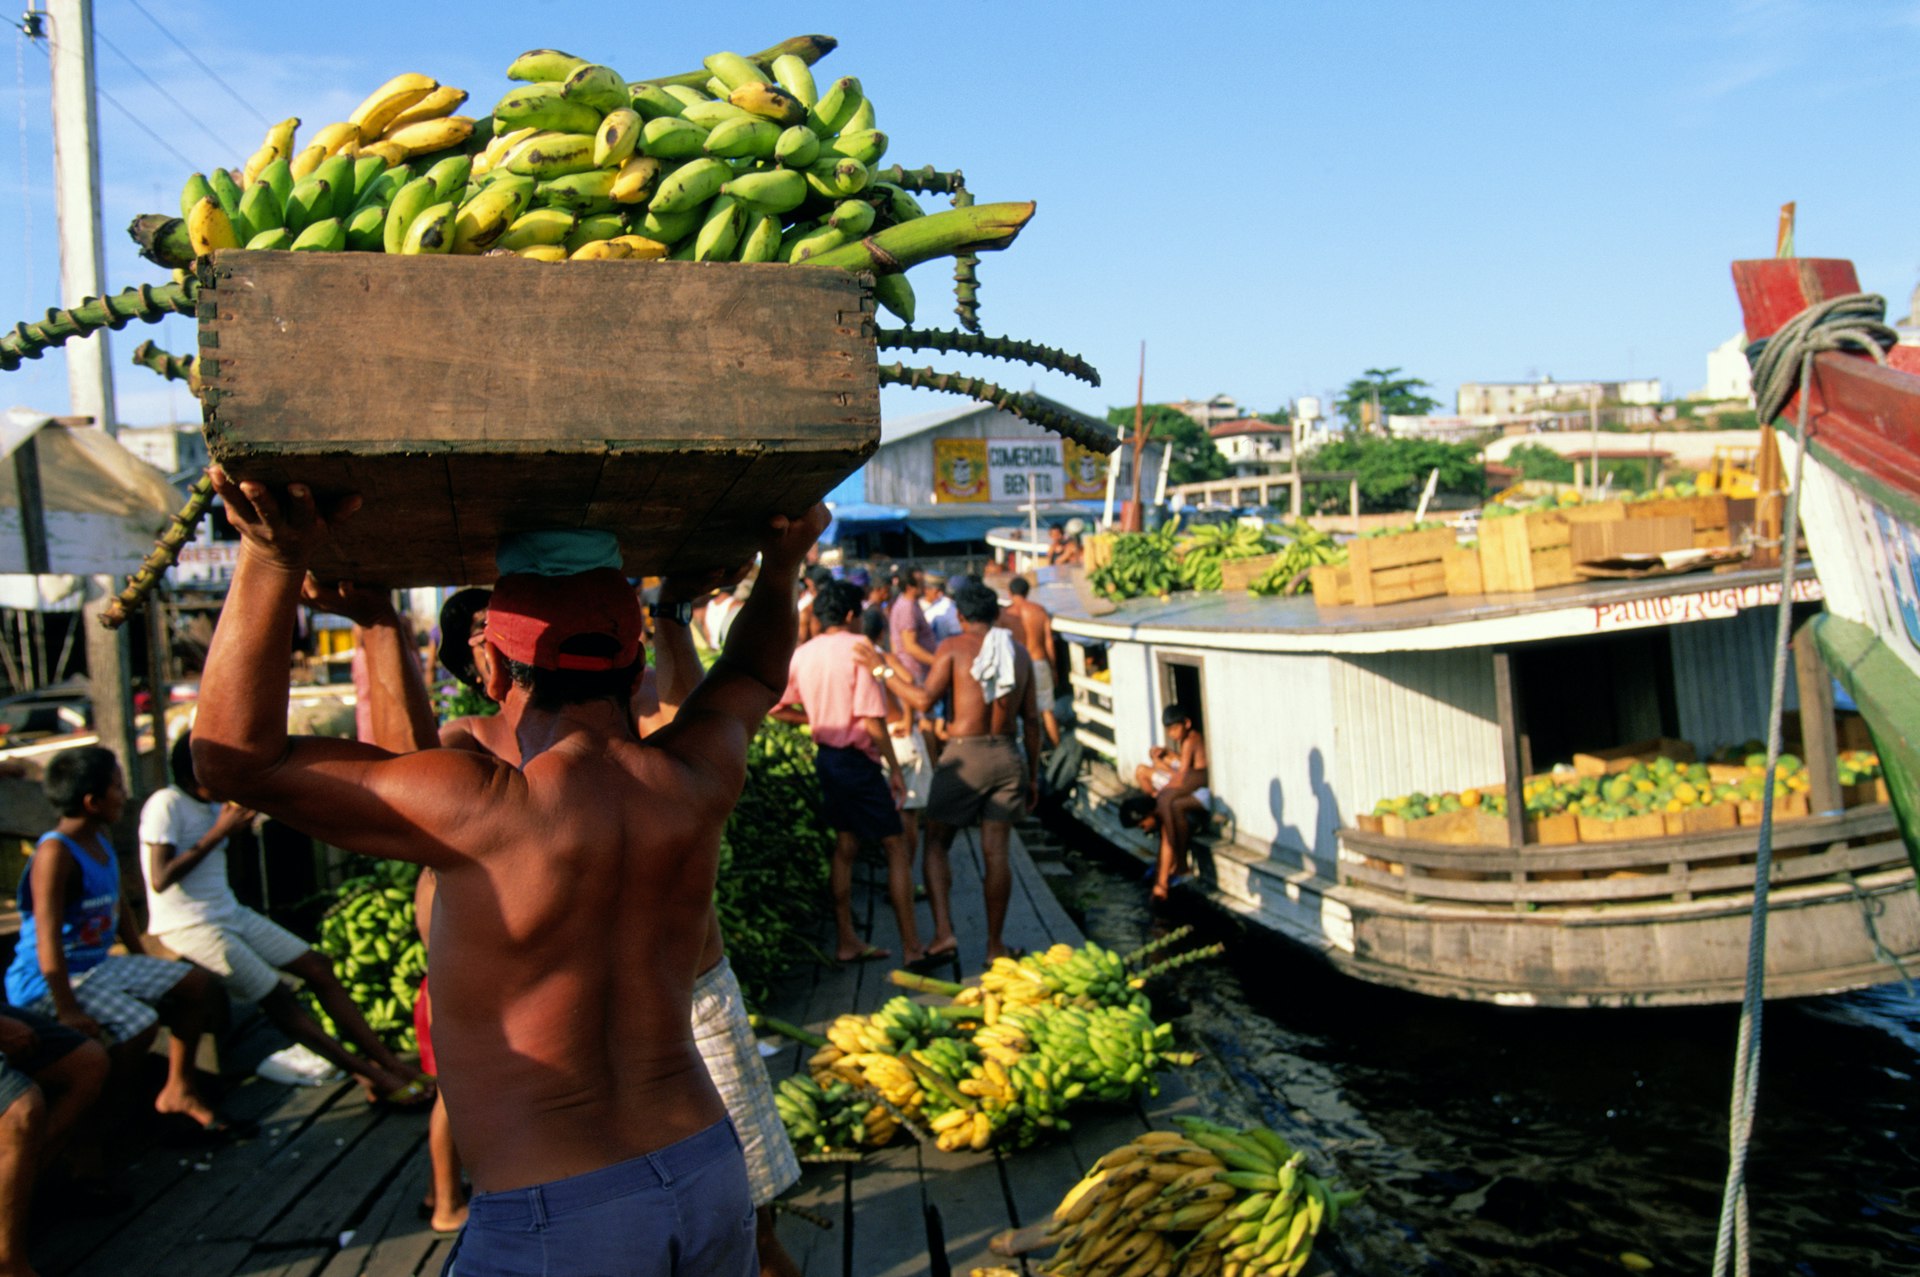 People load bananas into boats in Manaus, Amazonas, Brazil